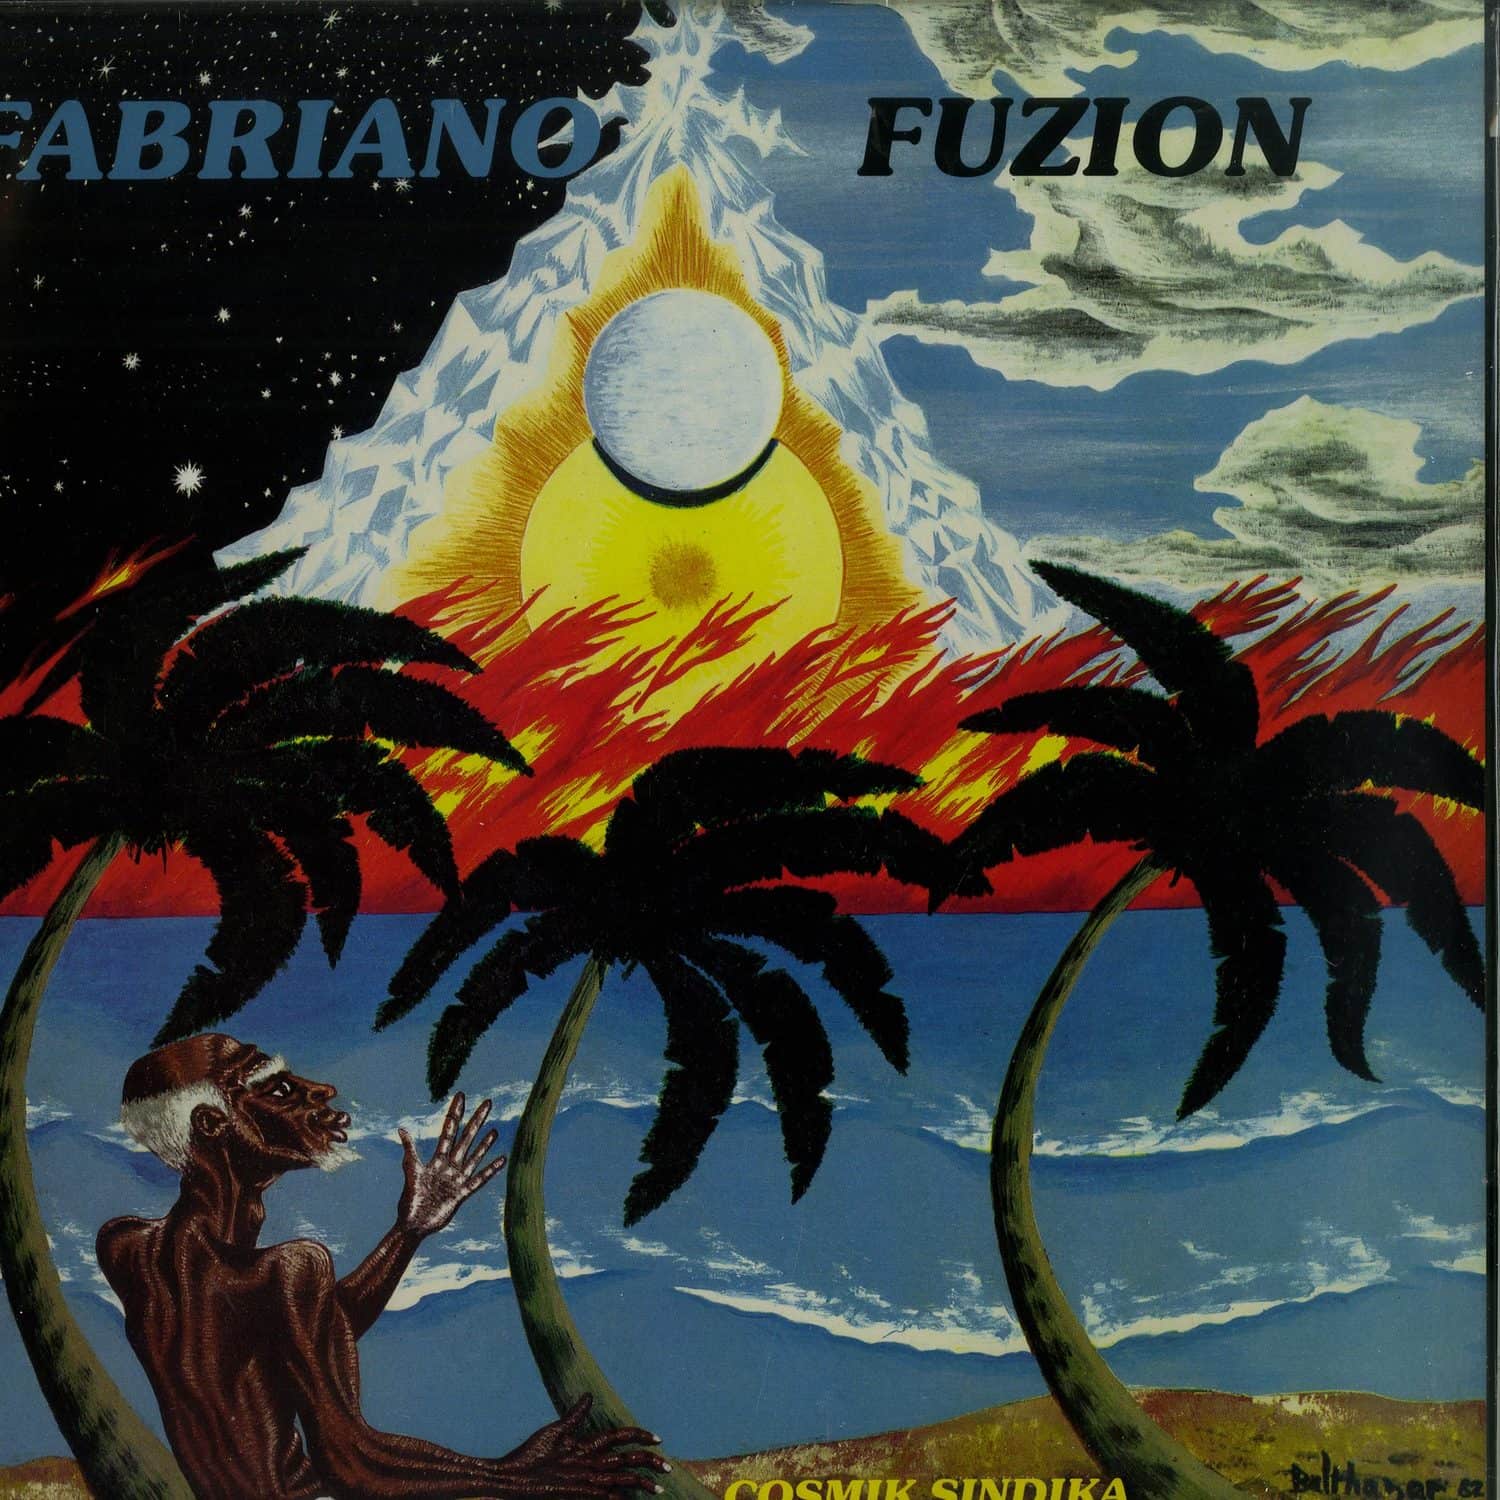 Fabriano Fusion - COMSIK SINDIKA